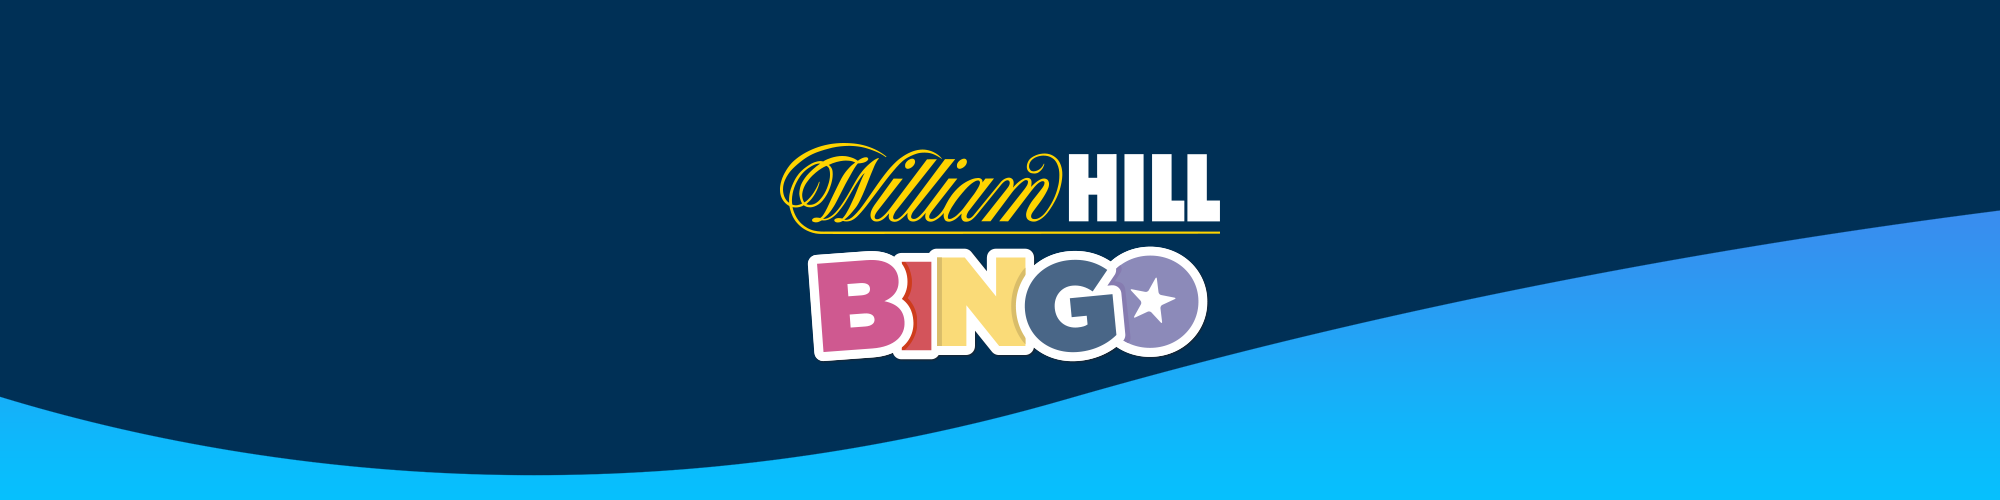 William Hill Bingo Alternative on EazeGames